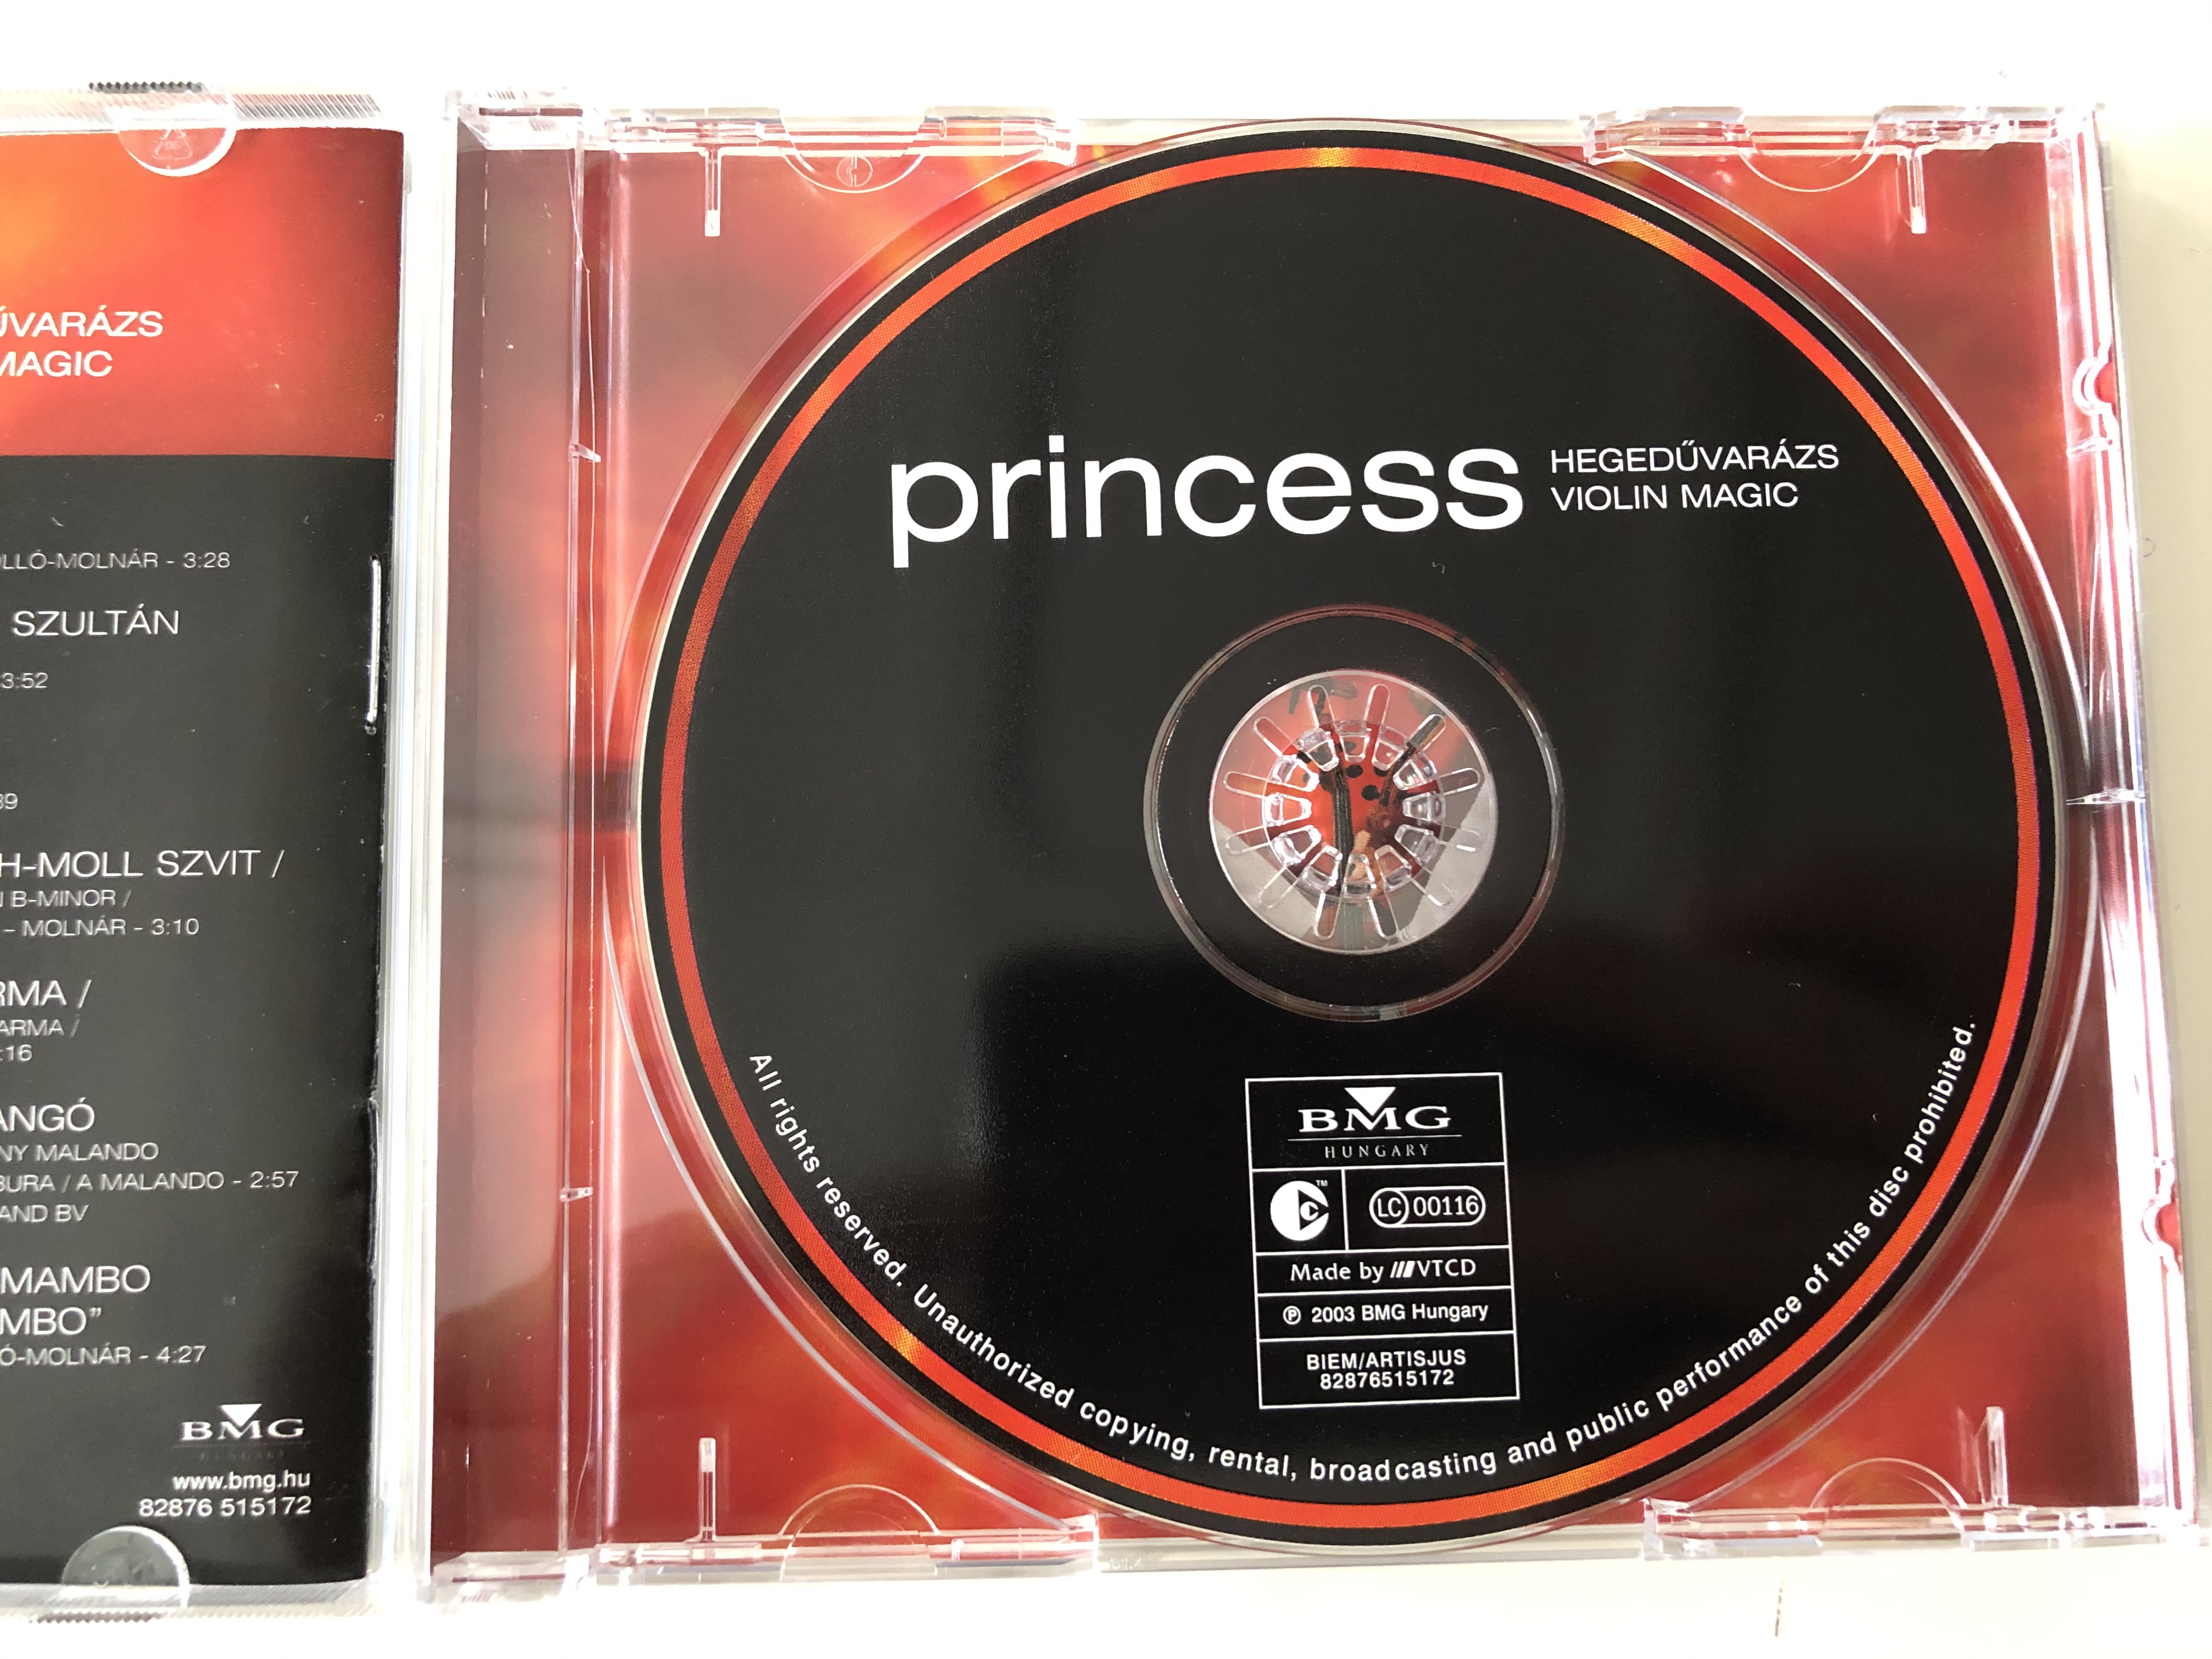 princess-heged-var-zs-violin-magic-bmg-hungary-audio-cd-2003-82876-515172-6-.jpg